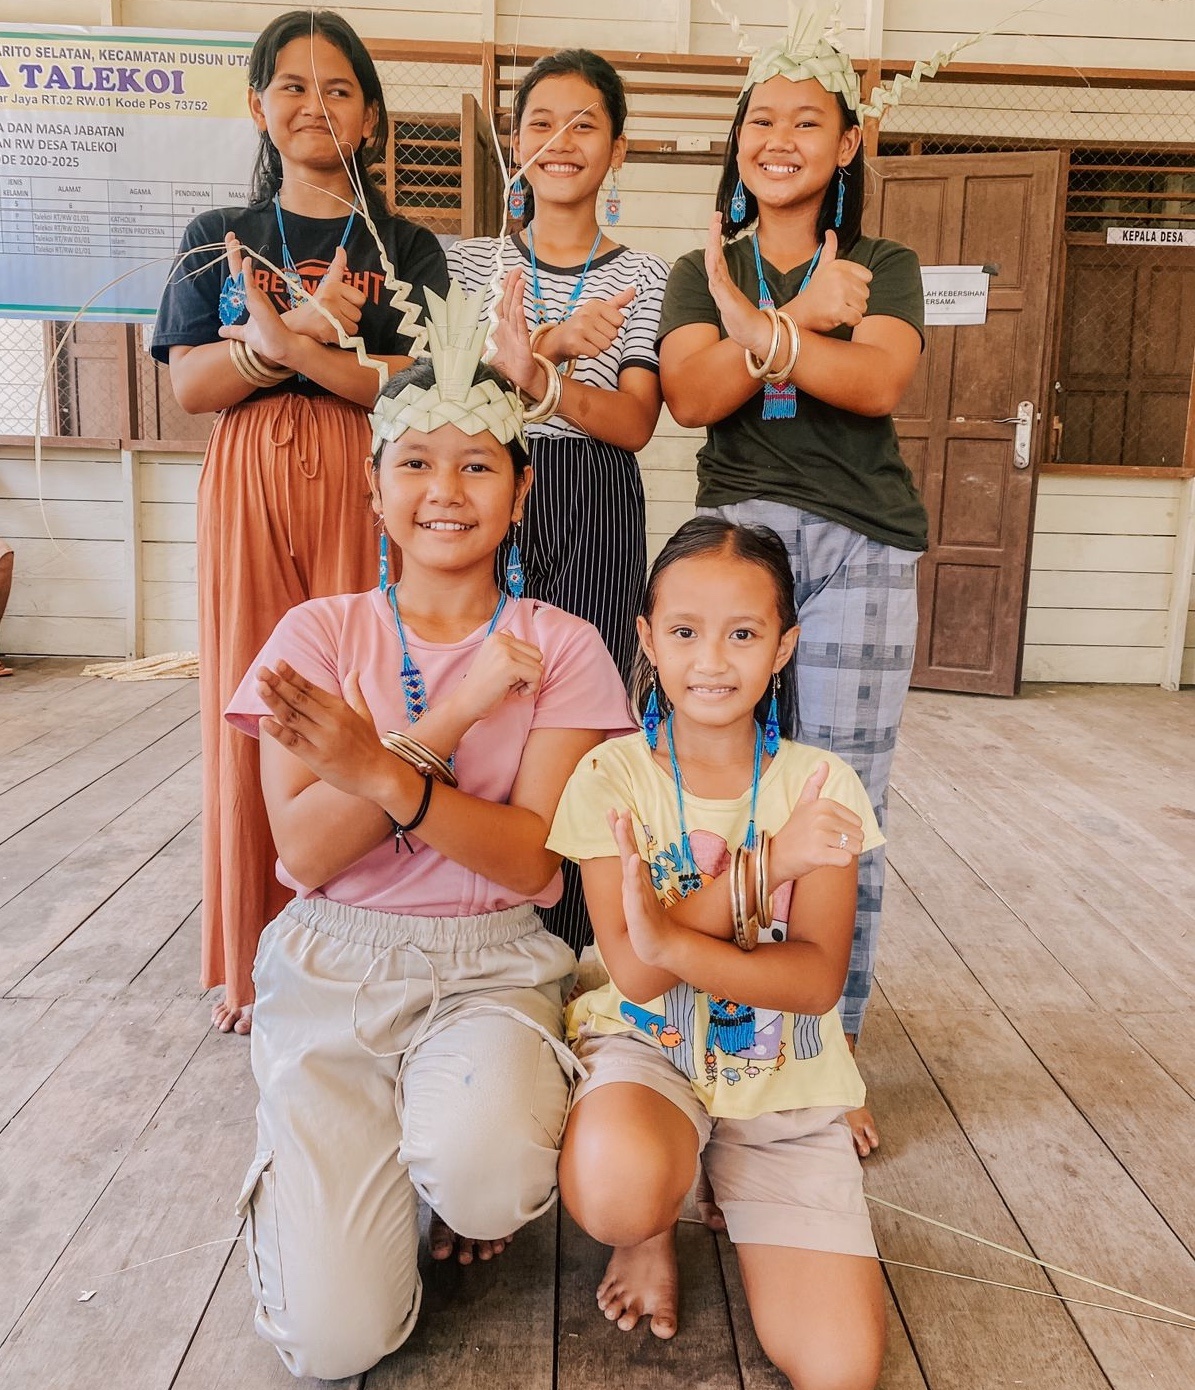 Yang Dayal students participating in Ranu Welum's Sekolah Adat Anri Arai Atei cultural education program.